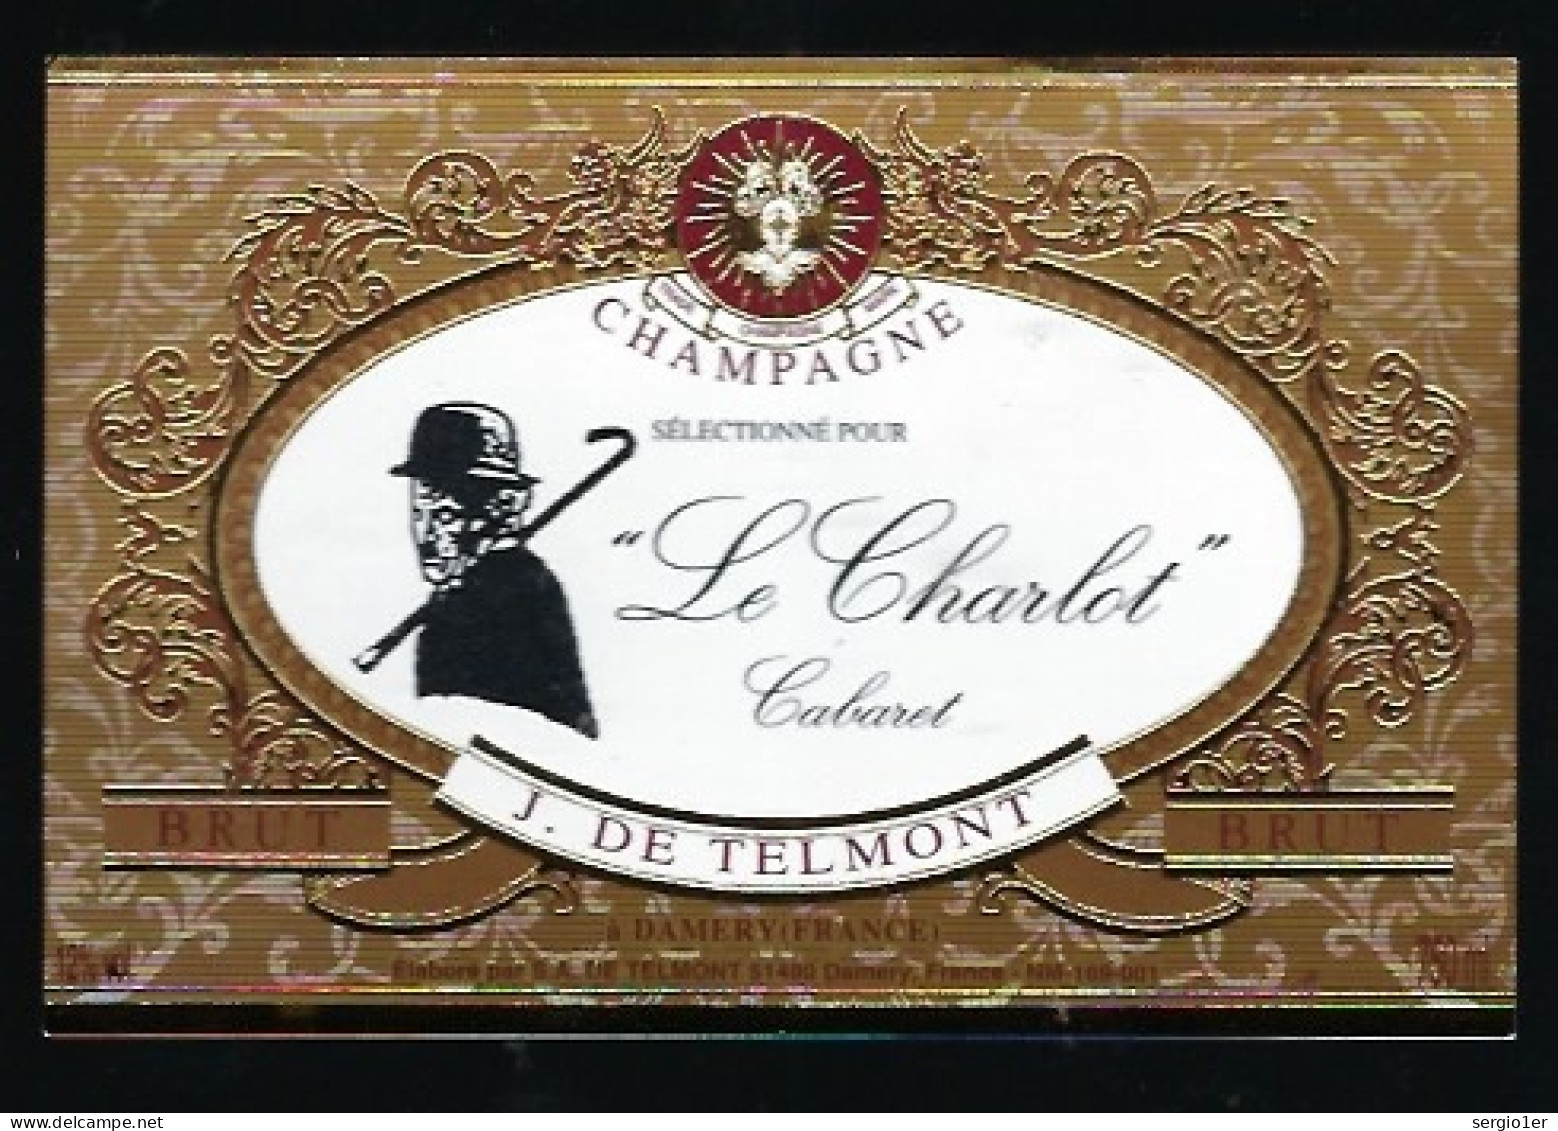 Etiquette Champagne  Brut Le Charlot  J De Telmont  Damery Marne 51 - Champagner